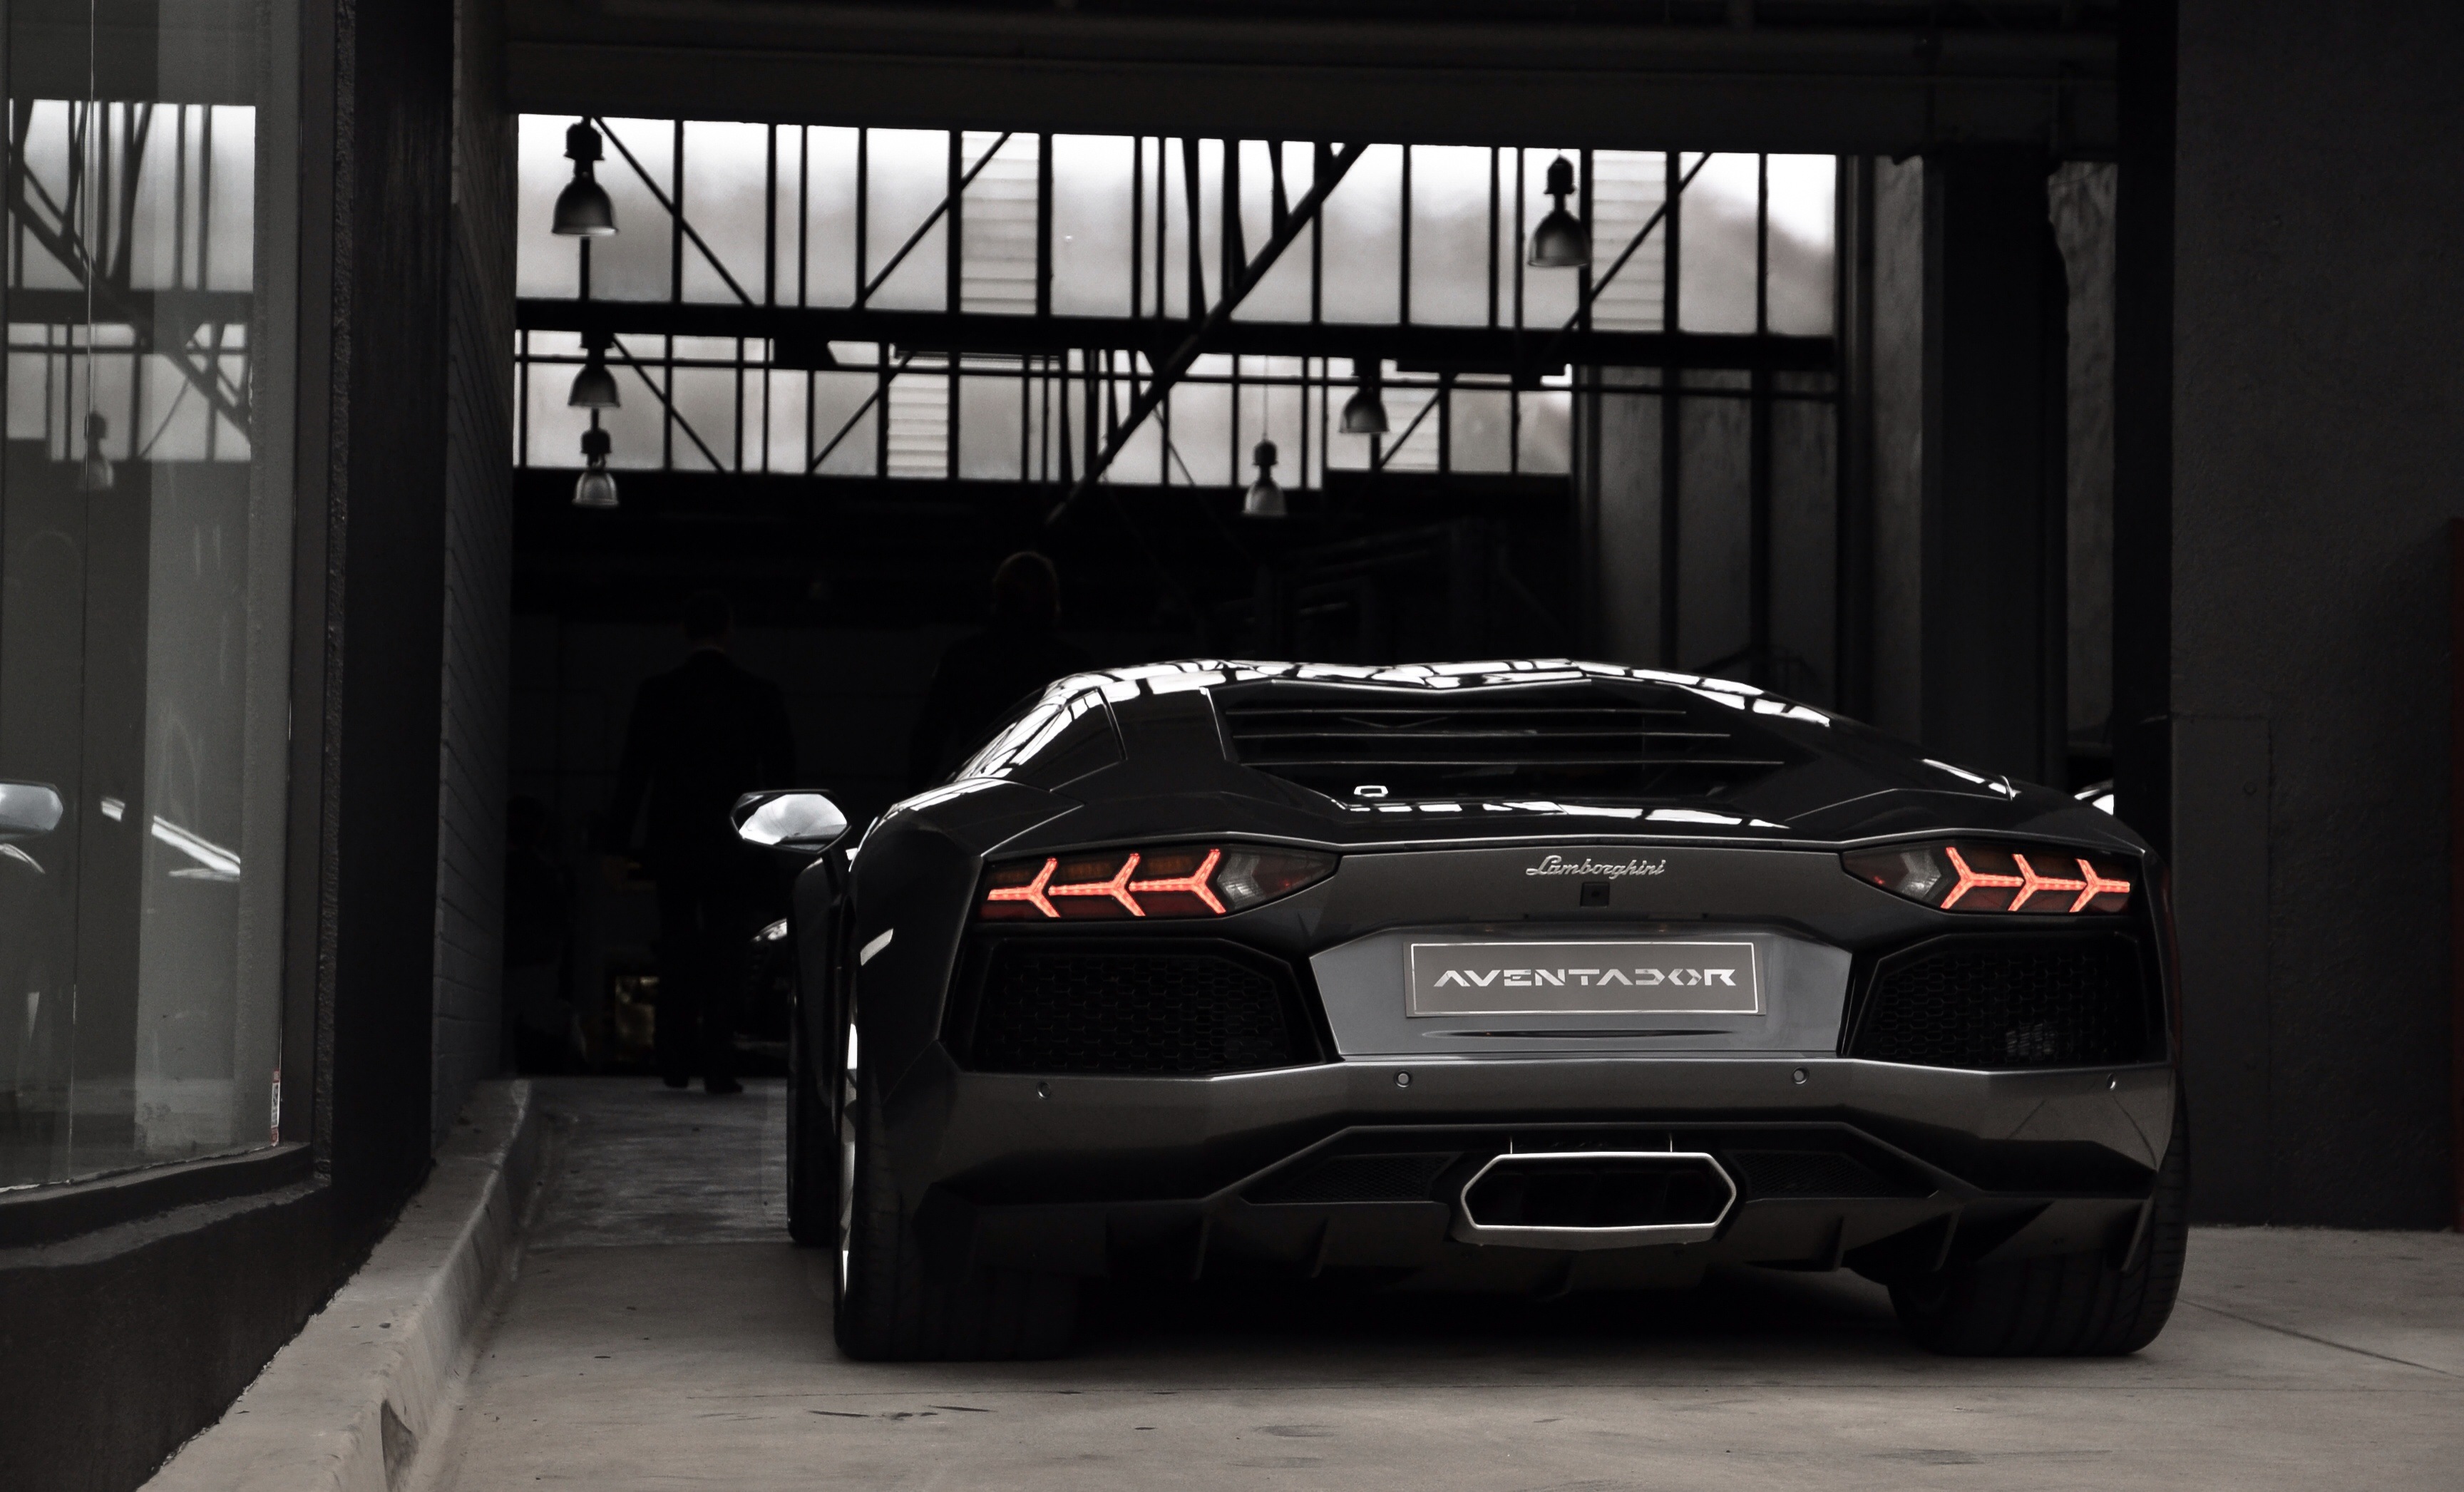 ламборгини авентадор черная Lamborghini aventador black без смс